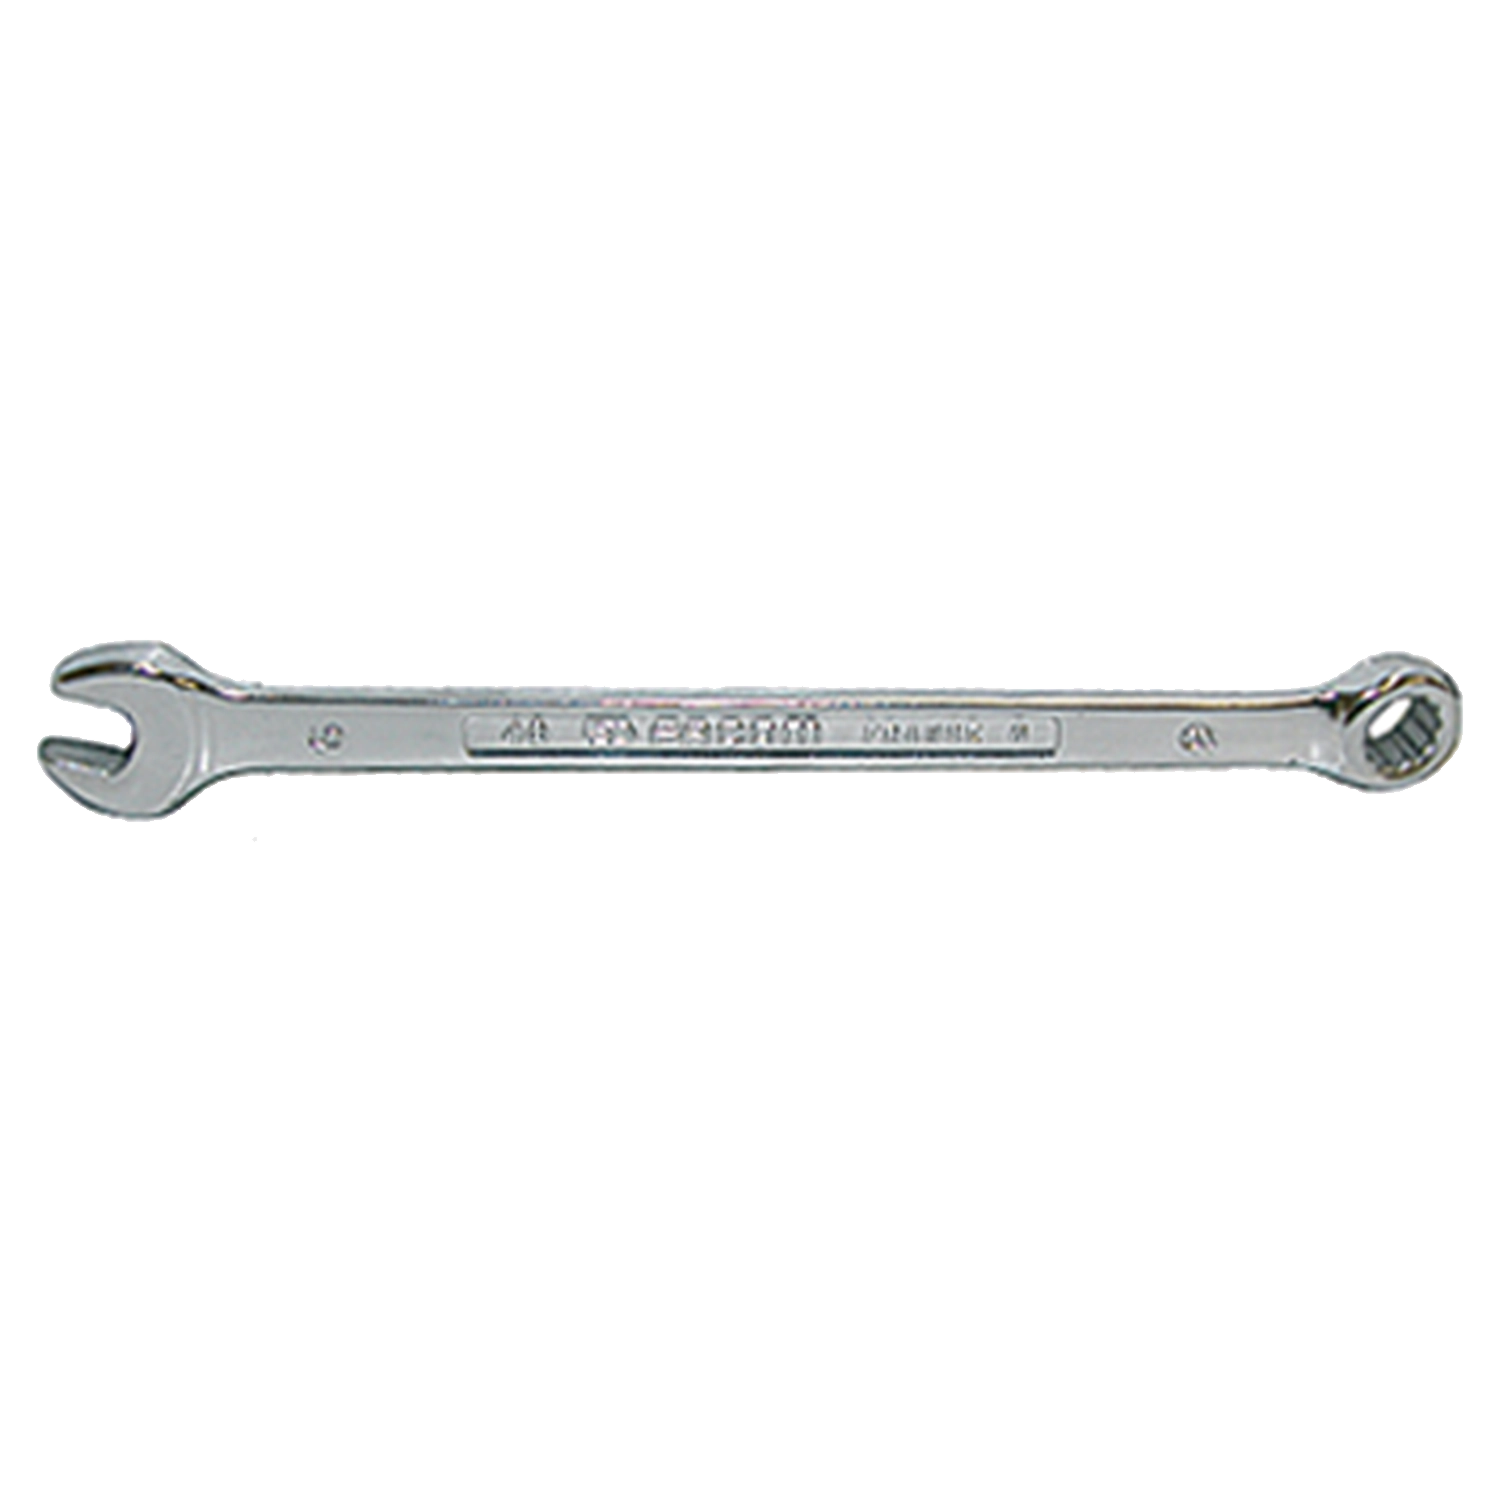 STROXX Ringsteeksleutel Type 440.22: Ringsteeksleutel met typeaanduiding 440.22